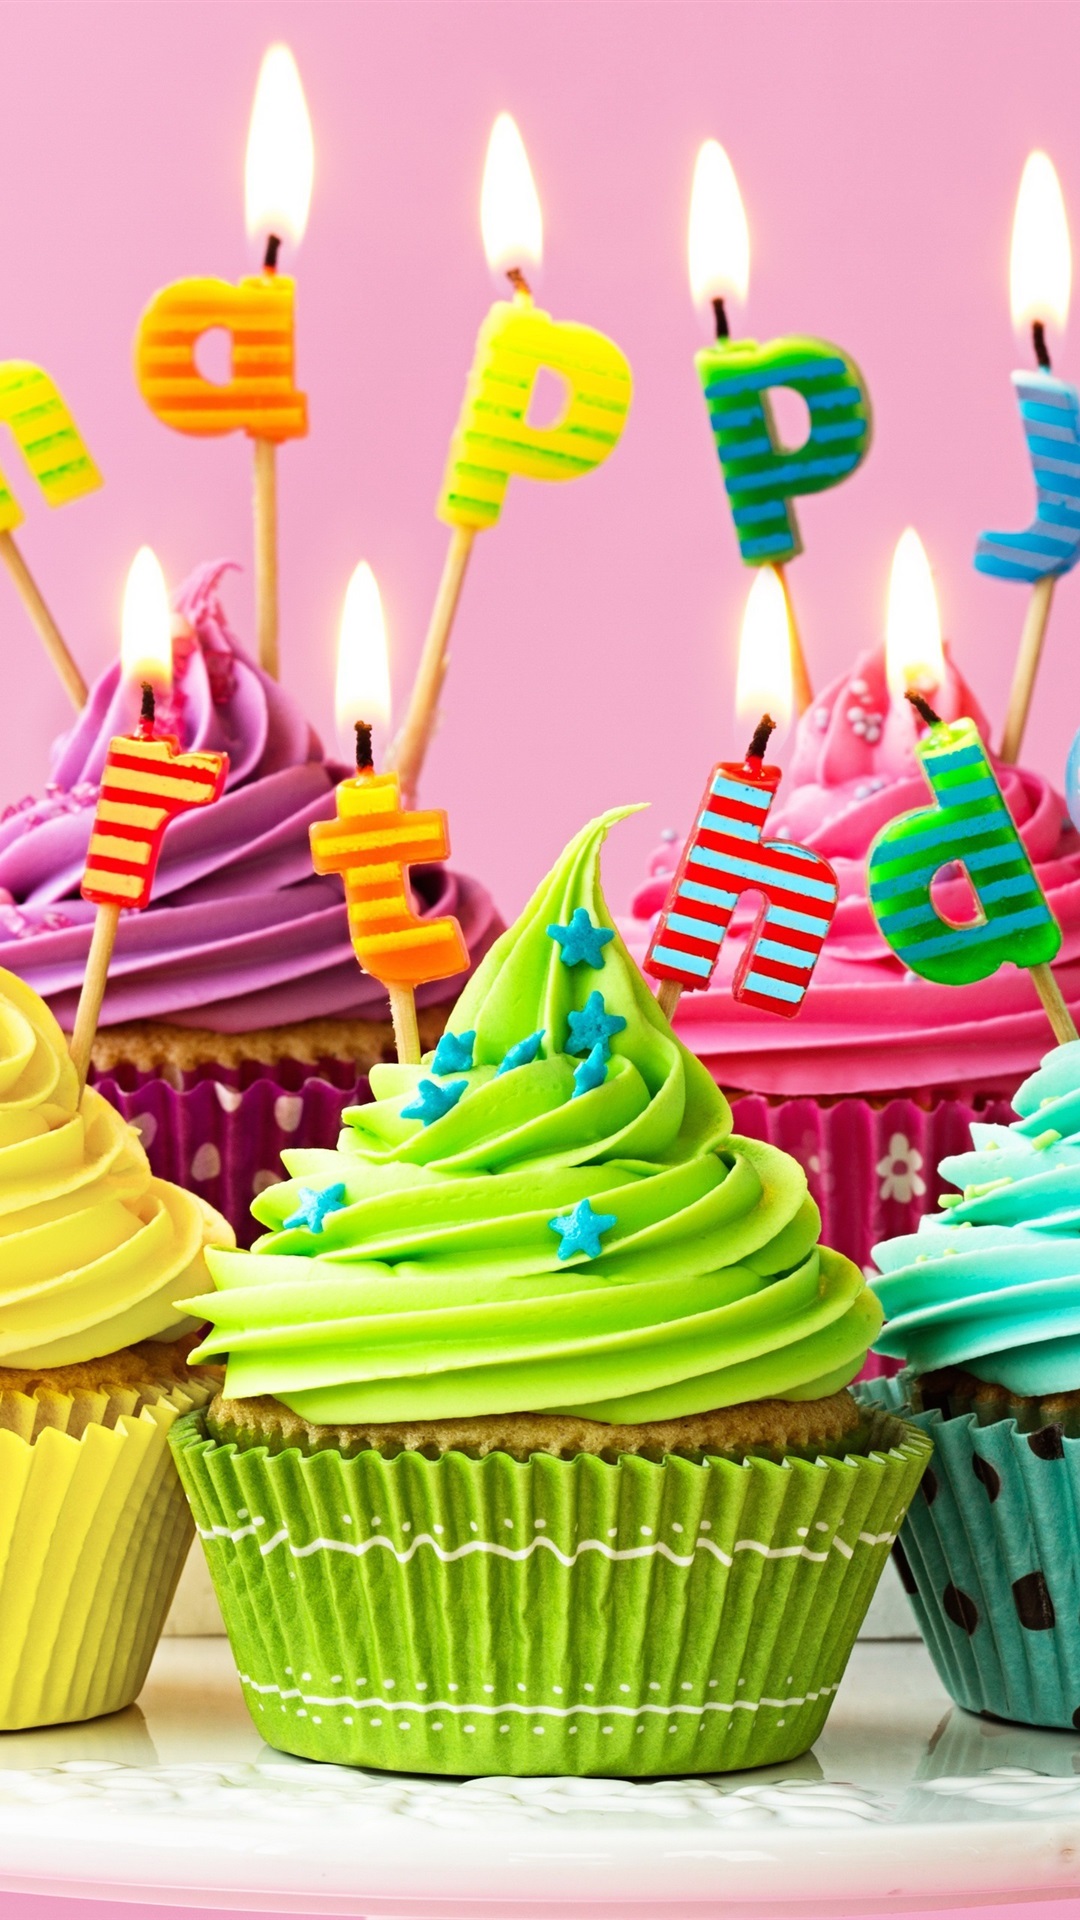 birthday wallpaper iphone,cupcake,food,cake,dessert,buttercream